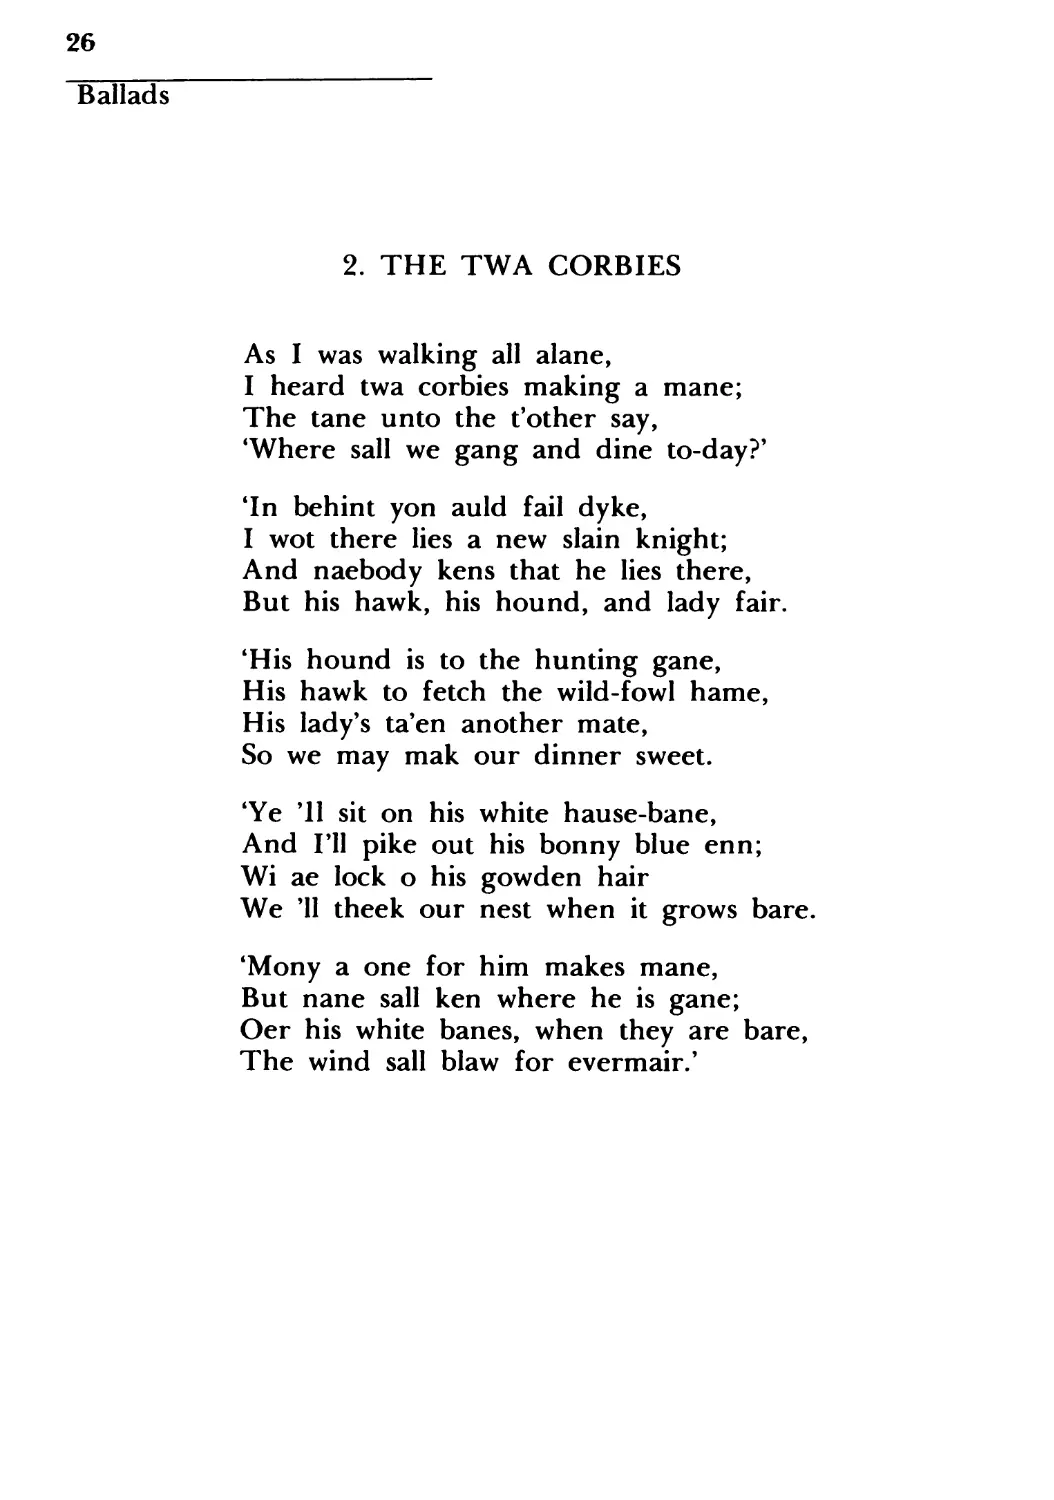 2. The Twa Corbies